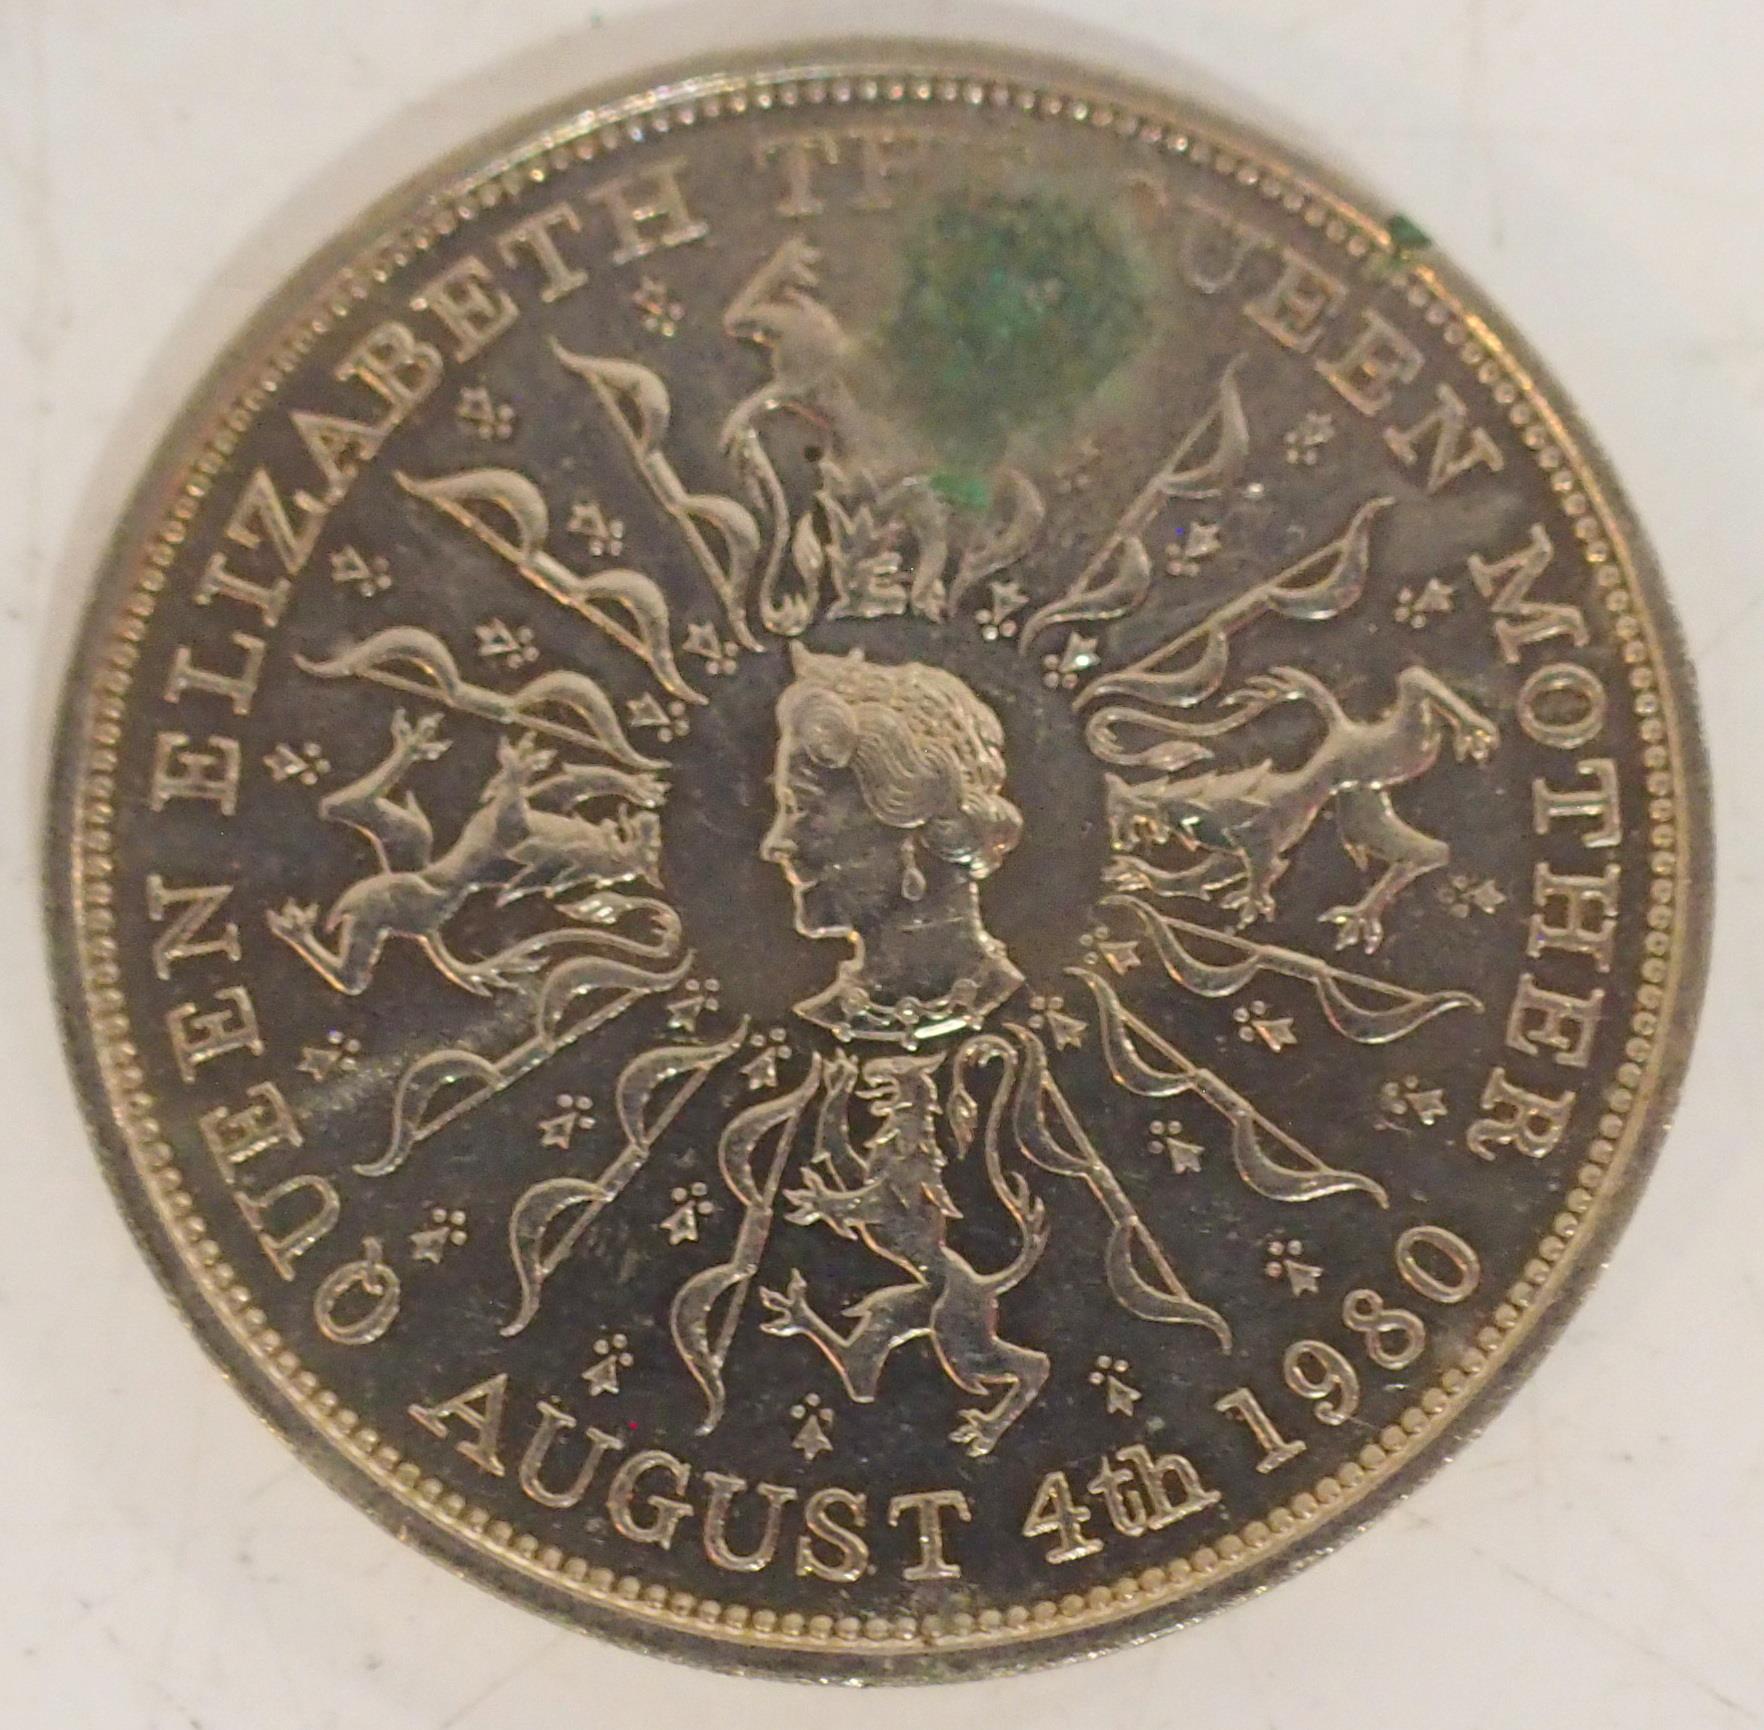 Elizabeth II (1952-2022) 25 New Pence - Elizabeth II Queen Mother Silver Coins (Twenty Pieces) - Image 2 of 3